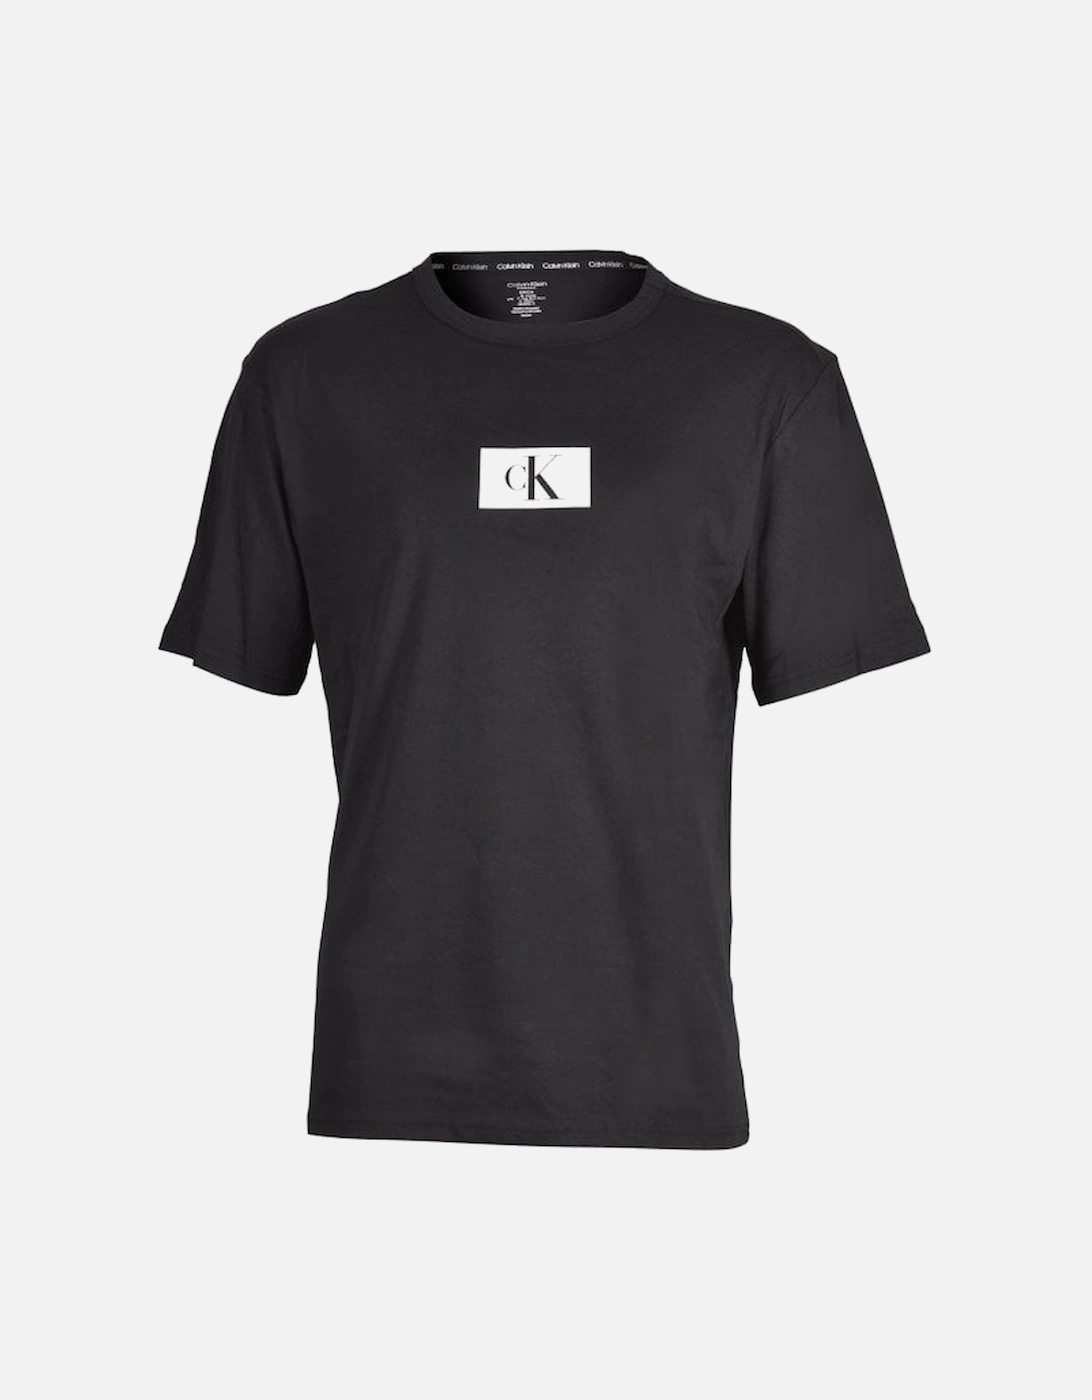 CK 96 Organic Cotton T-Shirt, Black, 6 of 5